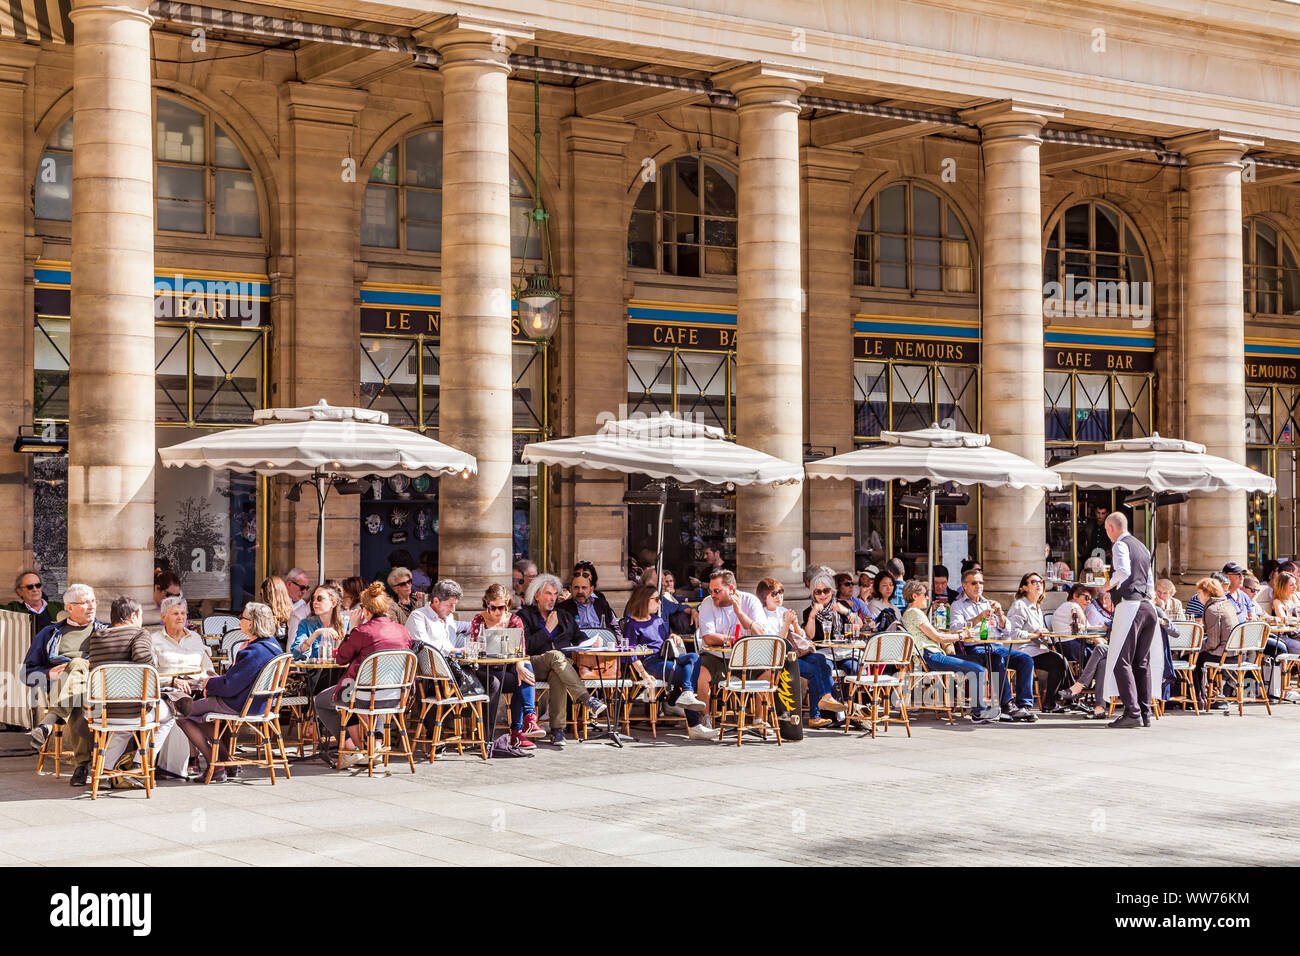 Frankreich, Paris, Stadtzentrum, Colette, Le Nemours Cafe Bar, Restaurant, Terrasse Stockfoto